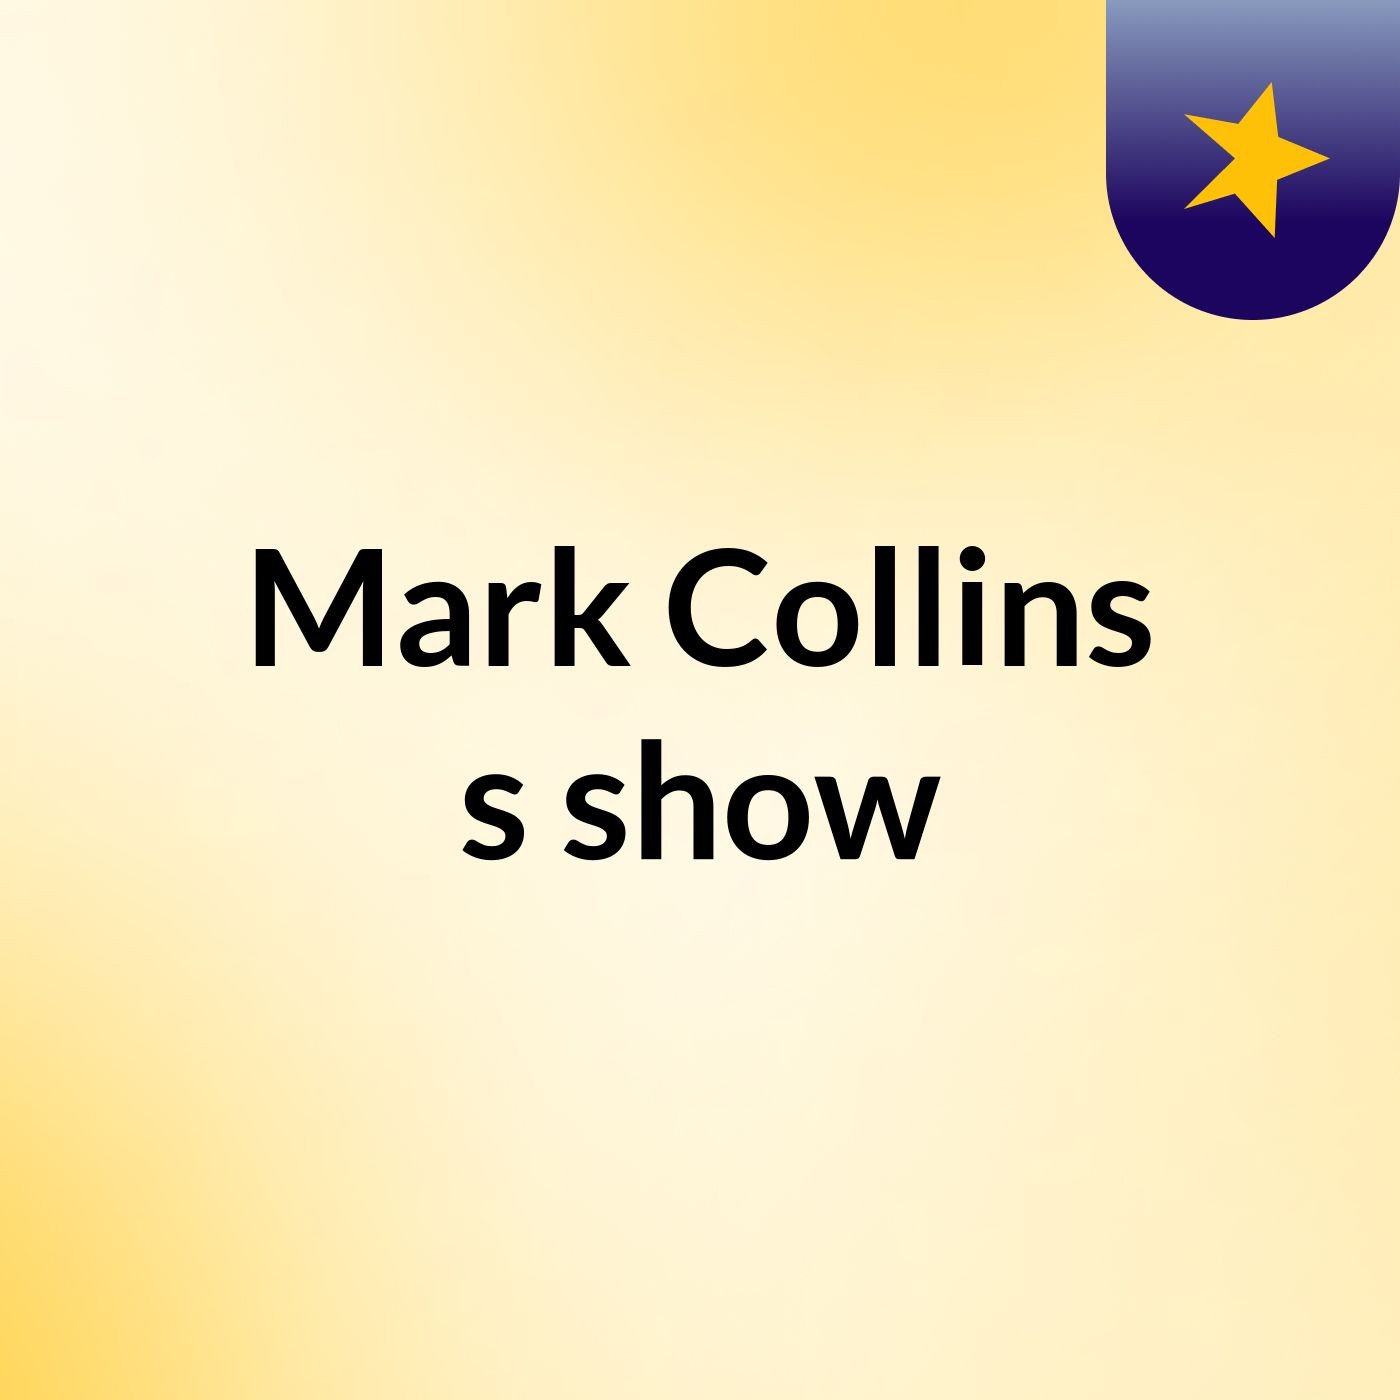 Mark Collins's show